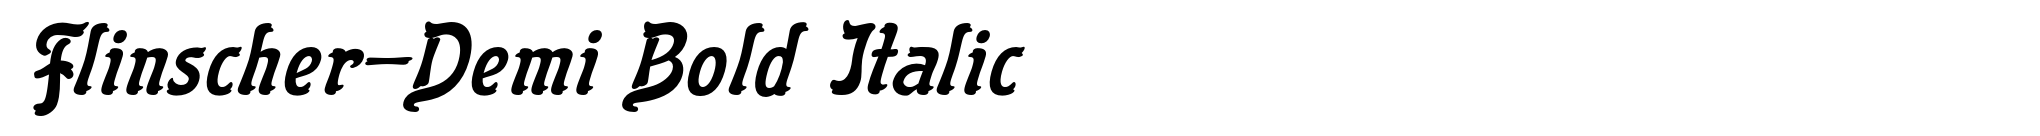 Flinscher-Demi Bold Italic image